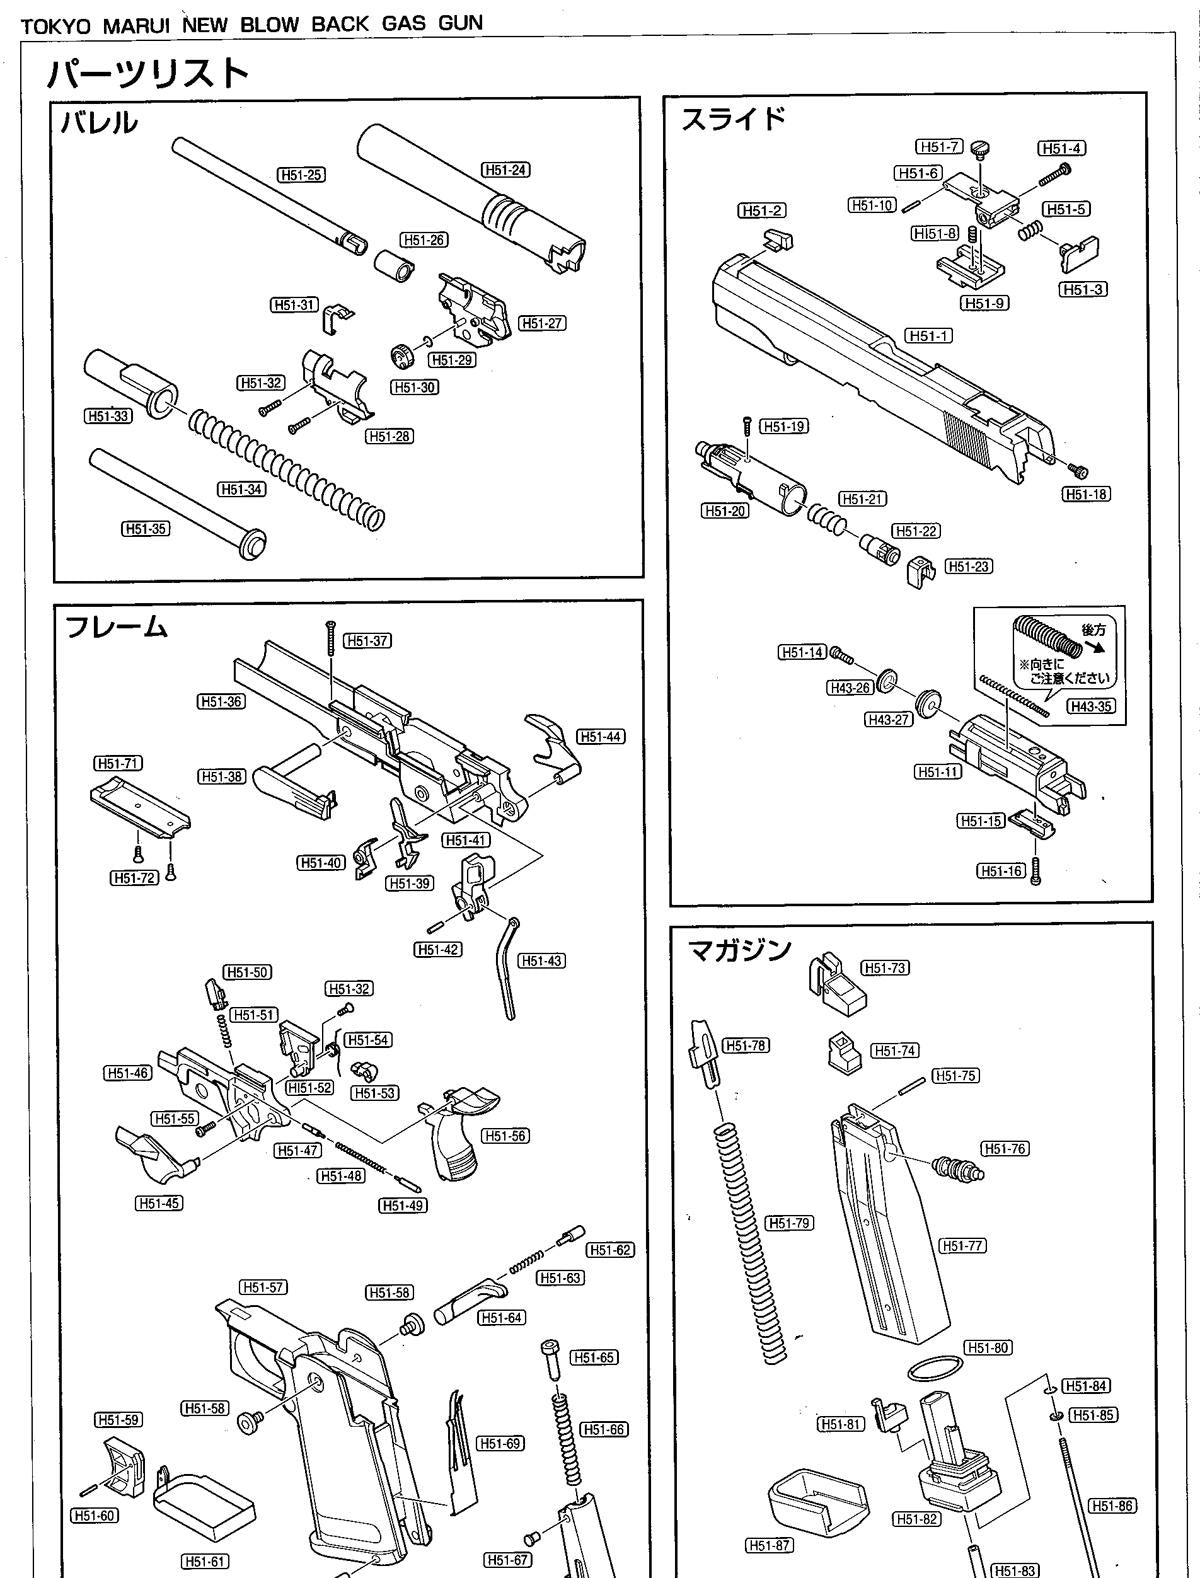 Tokyo Marui Hi-Capa - Replacement Part H51-14 - Piston Head Screw